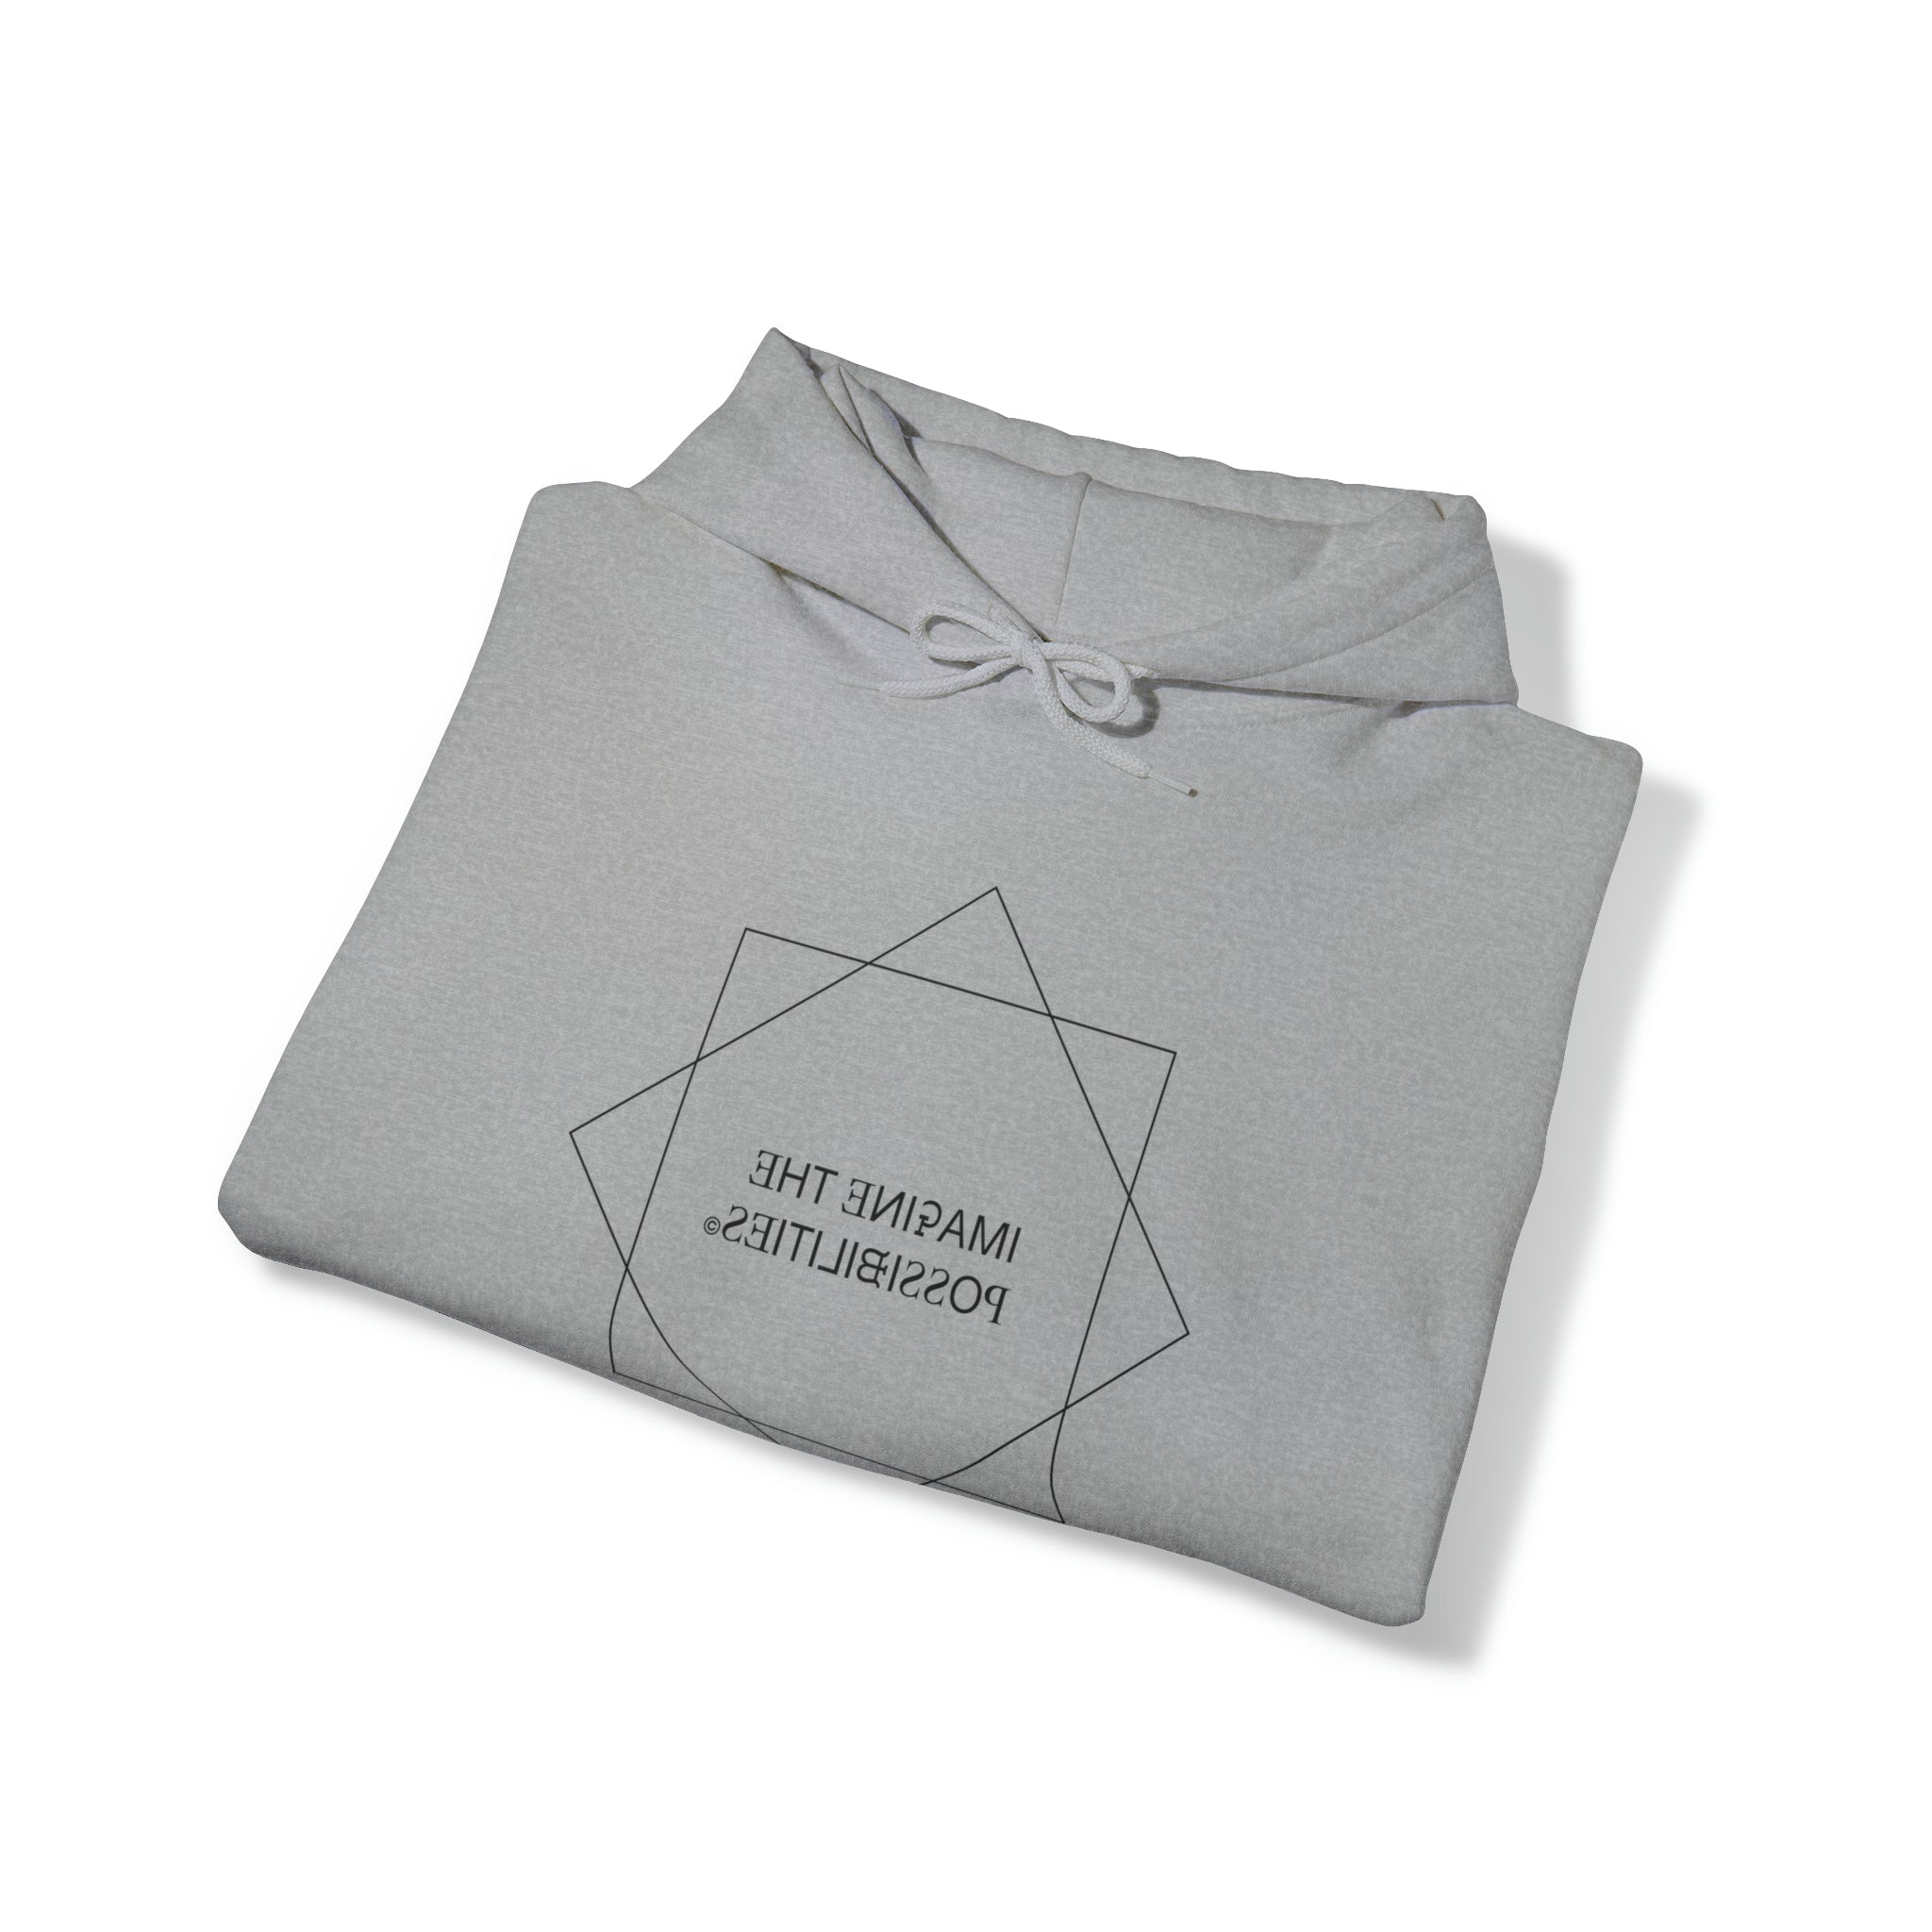 "Imagine the Possibilities" Unisex Hooded Sweatshirt